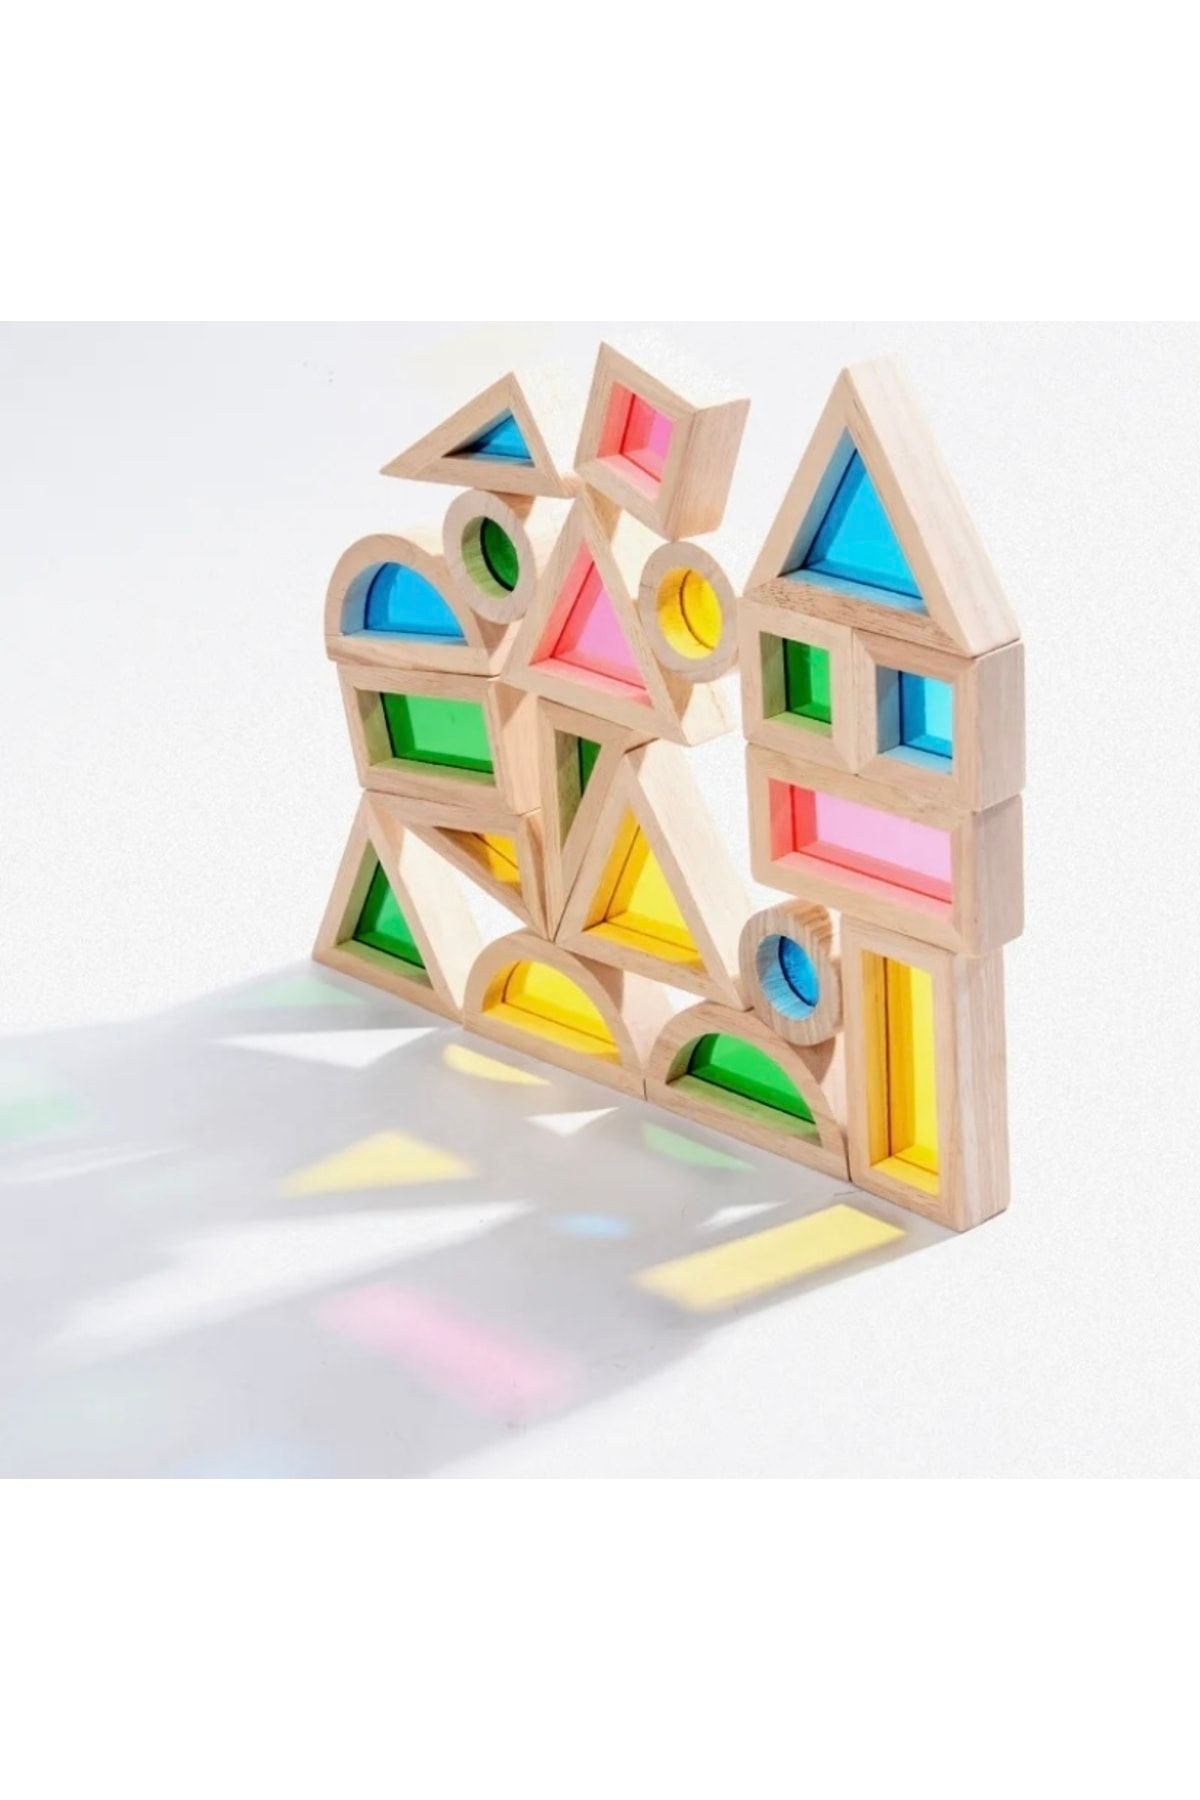 SAMTOYS Ahşap Montessori Gökkuşağı Blokları 24 Parça Rainbow Blocks